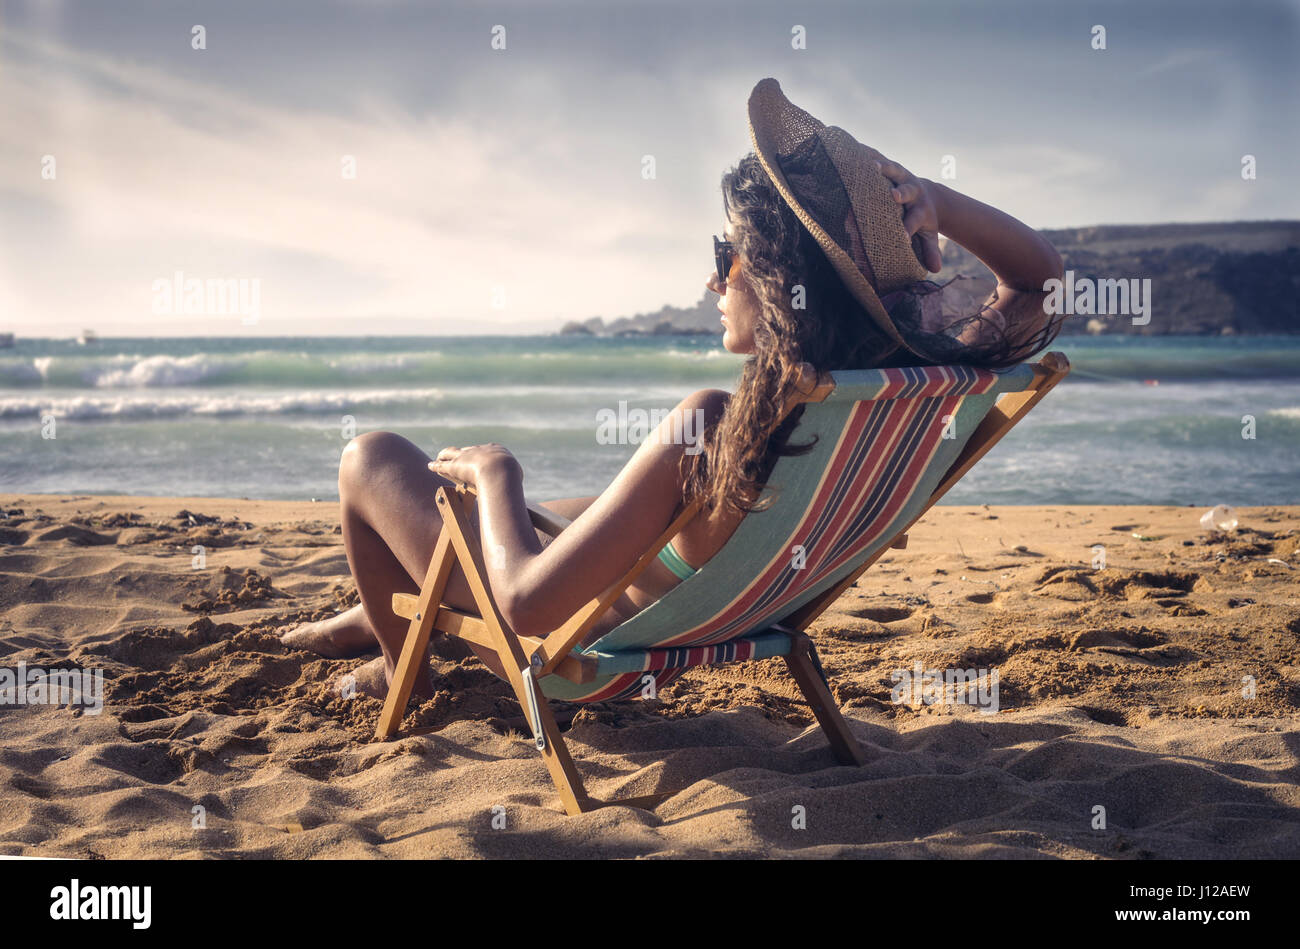 Woman sitting on beach chair Stock Photo